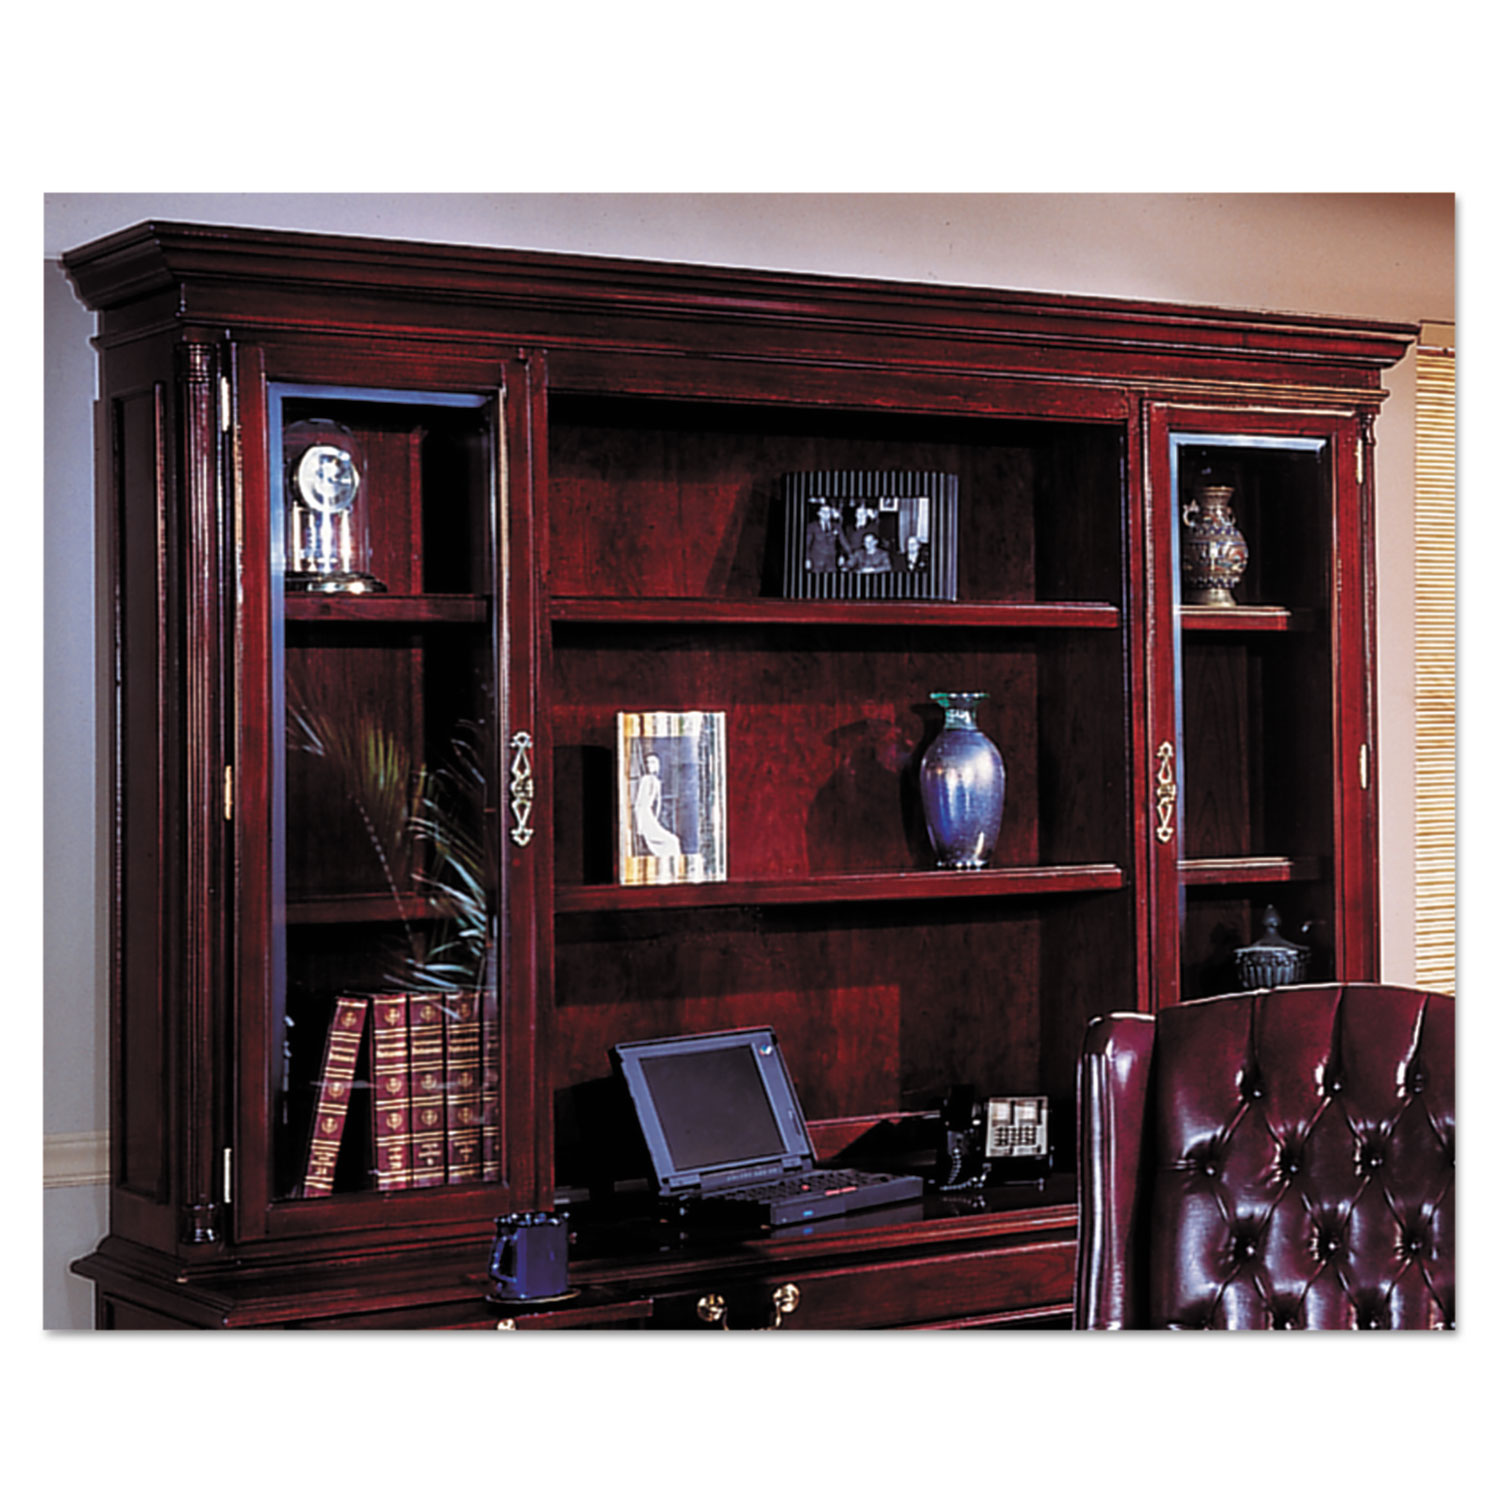  DMi Furniture 40079900062 Keswick Collection Hutch, 72w x 15d x 50h, Cherry (DMI799062) 